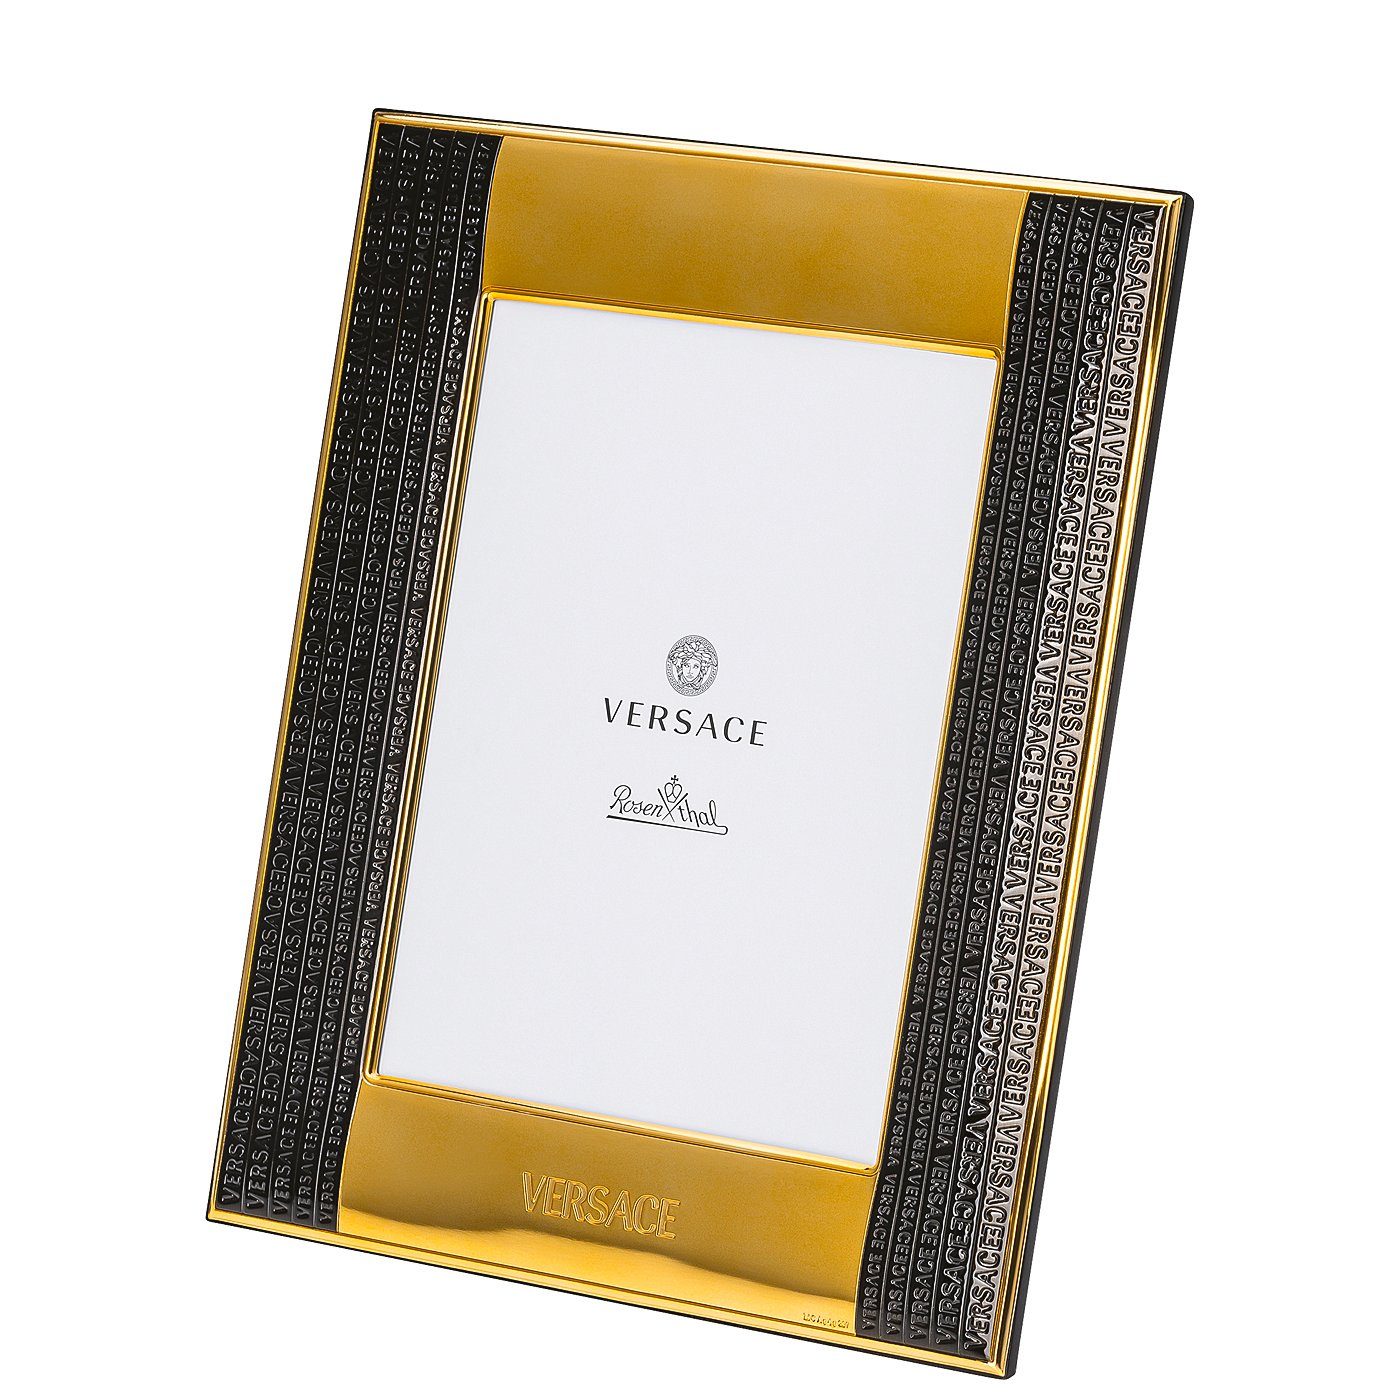 VHF10 meets Versace Rosenthal 15x20cm Gold-Black Bilderrahmen Frames